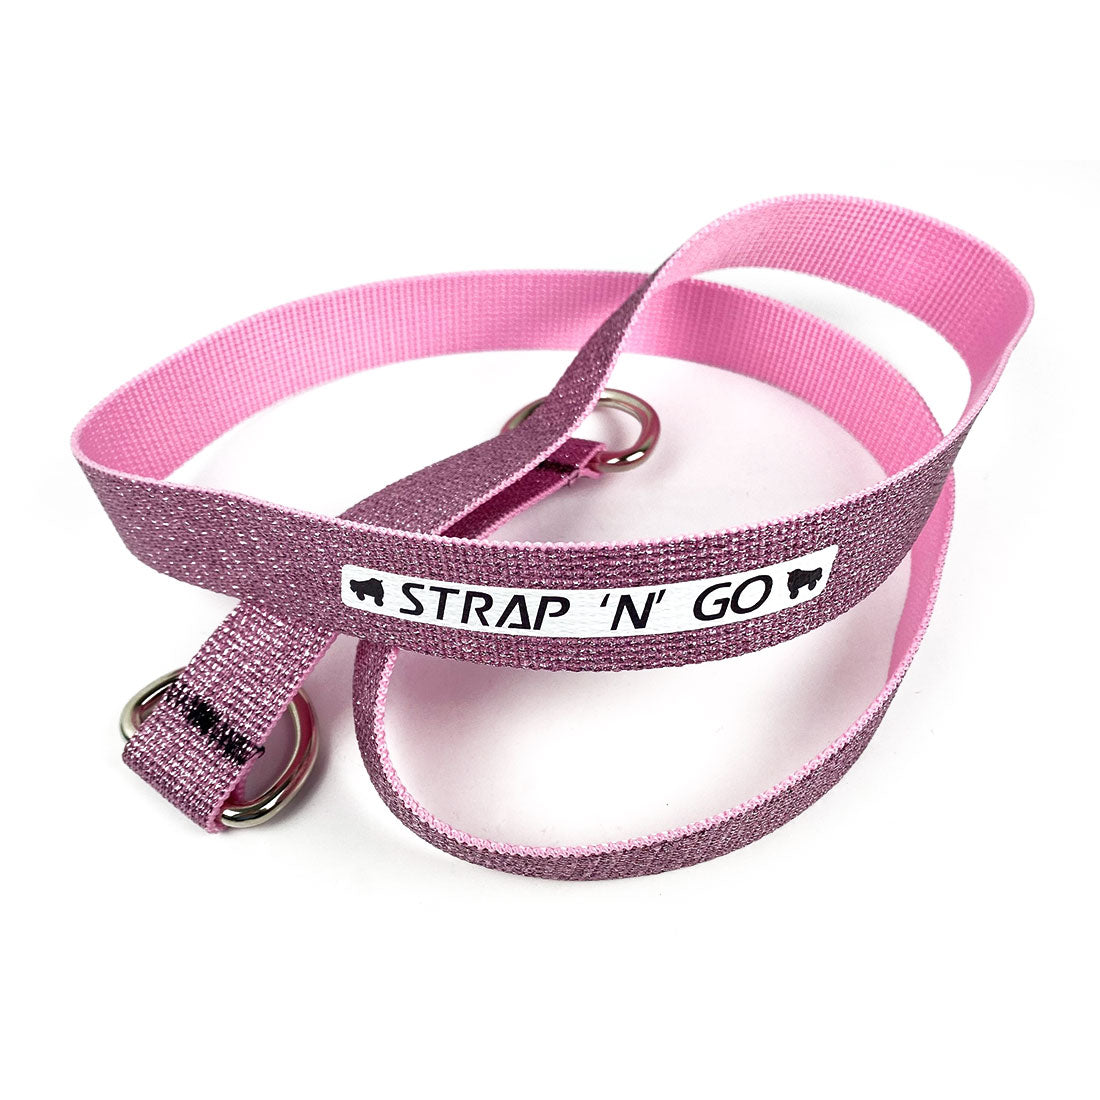 Strap N Go Skate Noose/Leash - Glitter Glitter Pink Strawberry Roller Skate Accessories